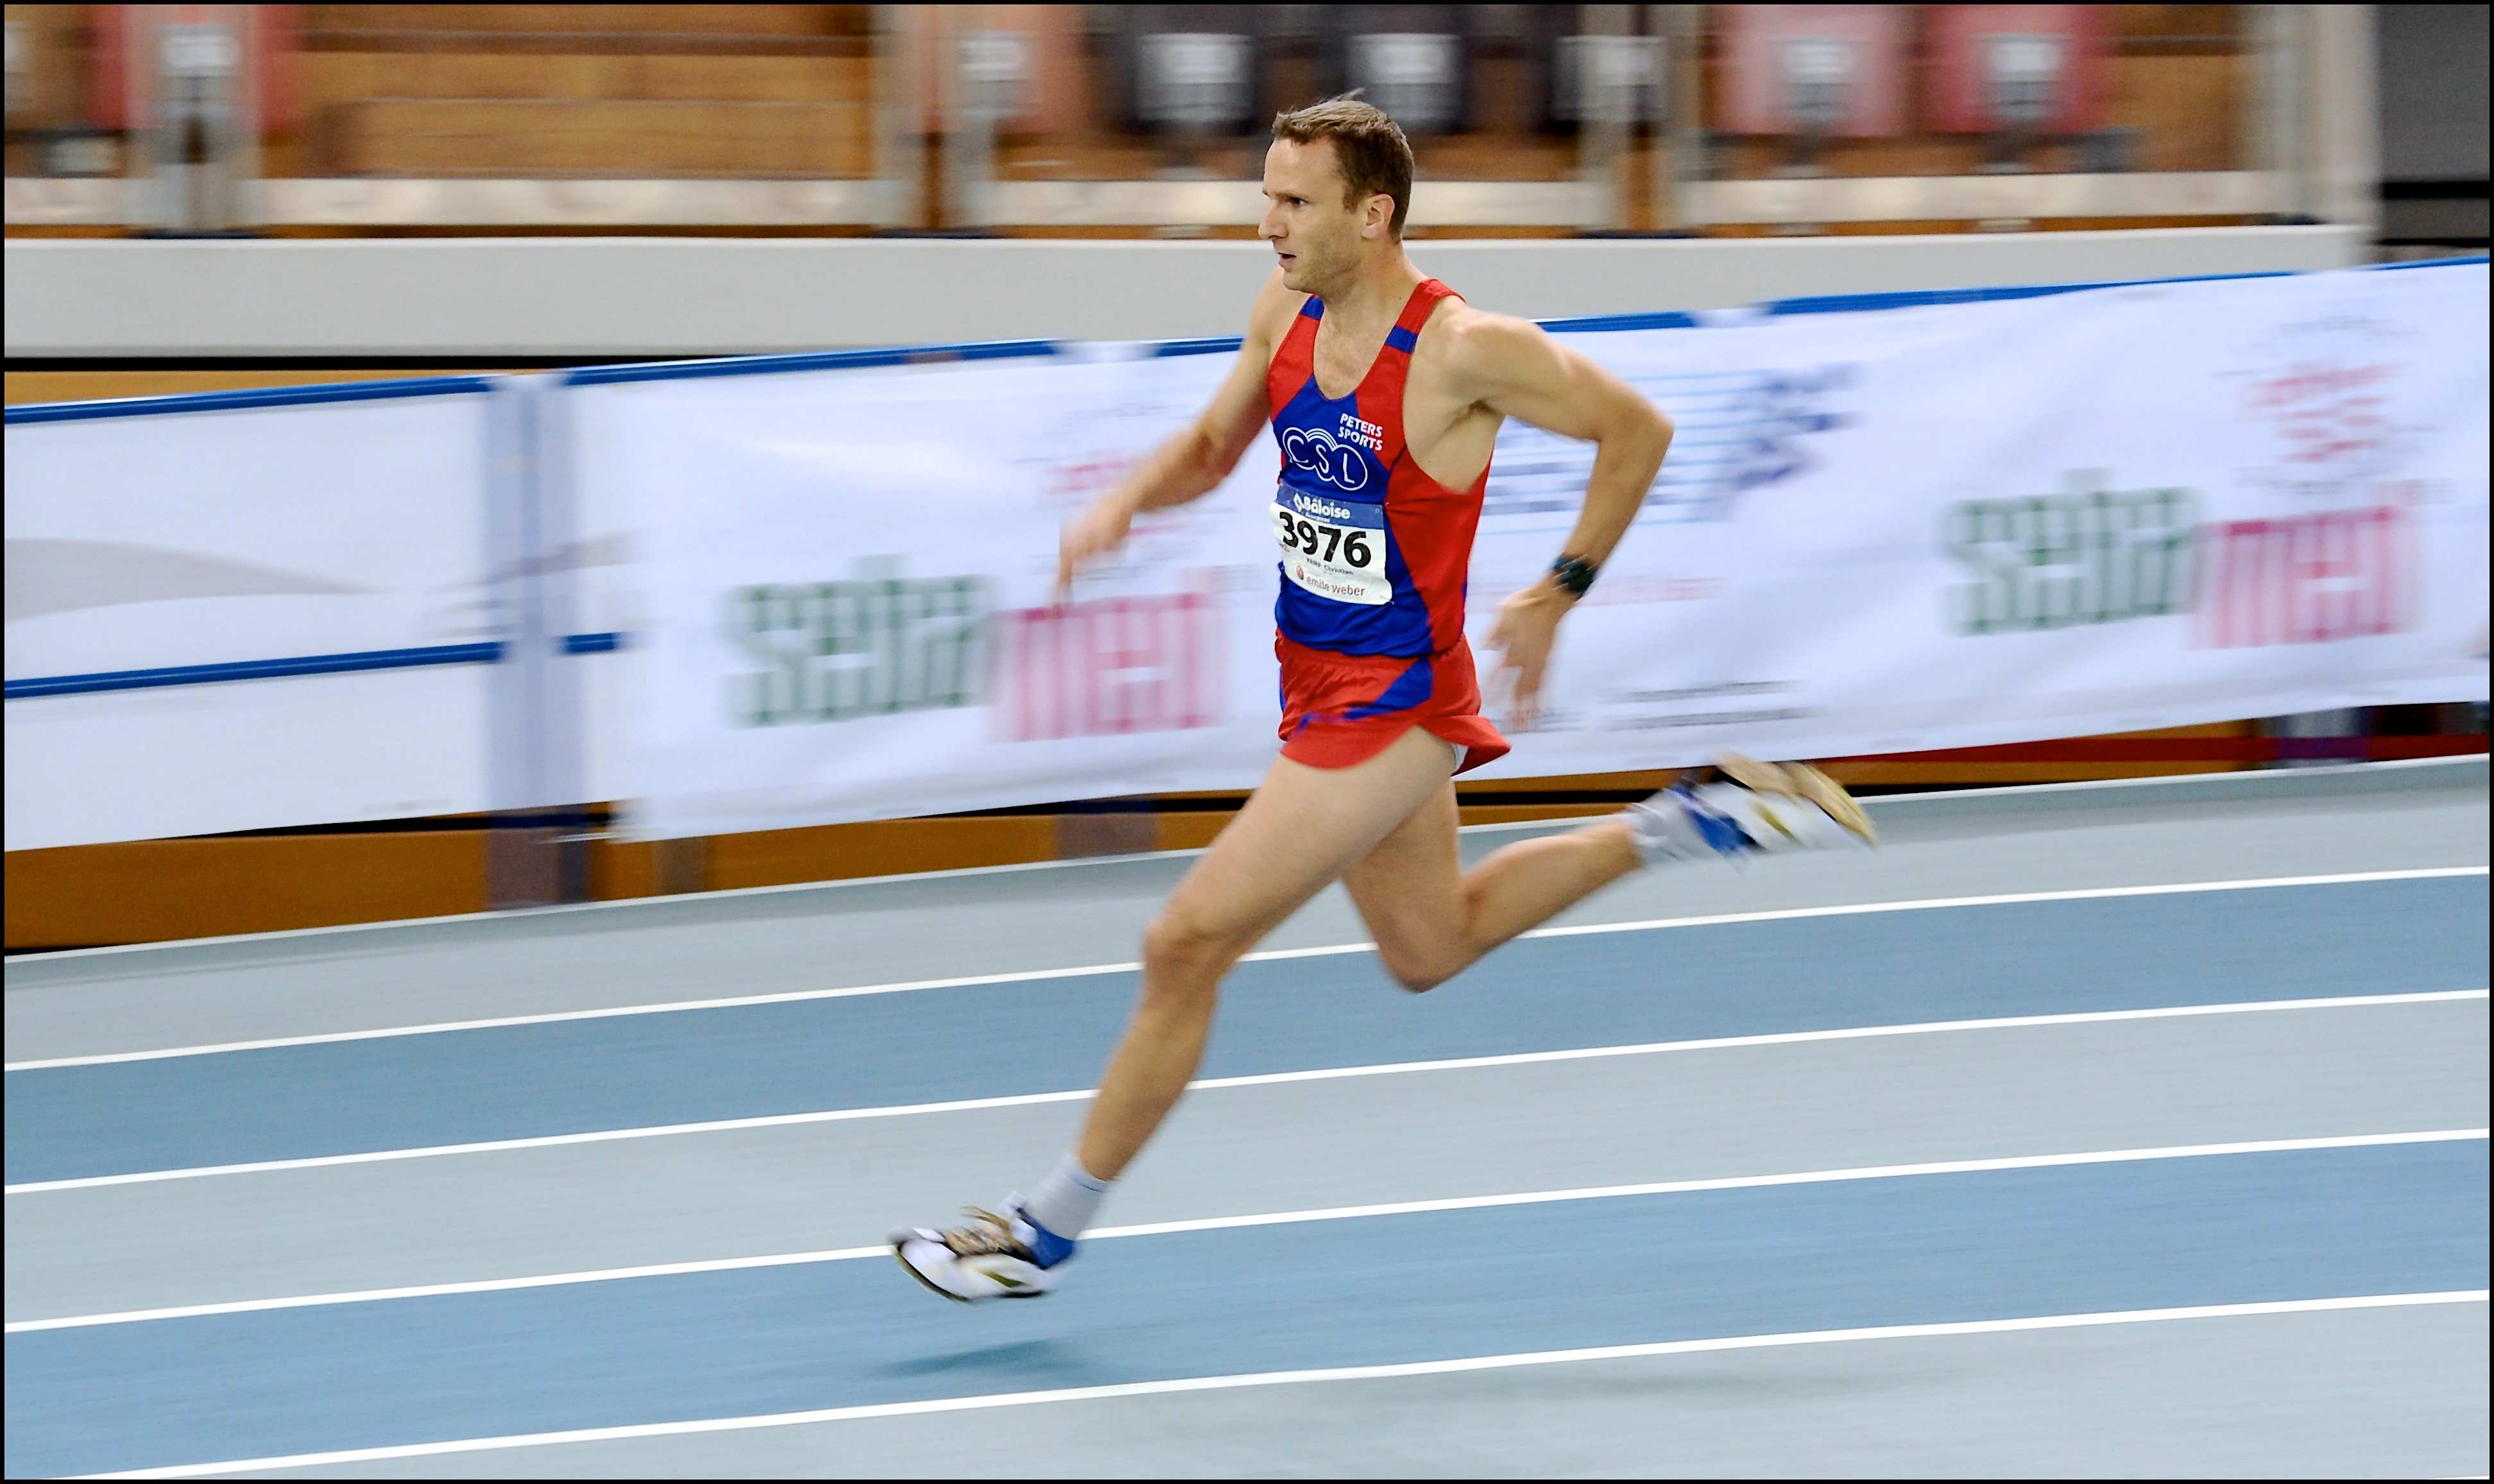 20160123. Athletisme. Championnats Nationaux Indoor. 200m Christian Kemp. Photo Julien Garroy / EDITPRESS